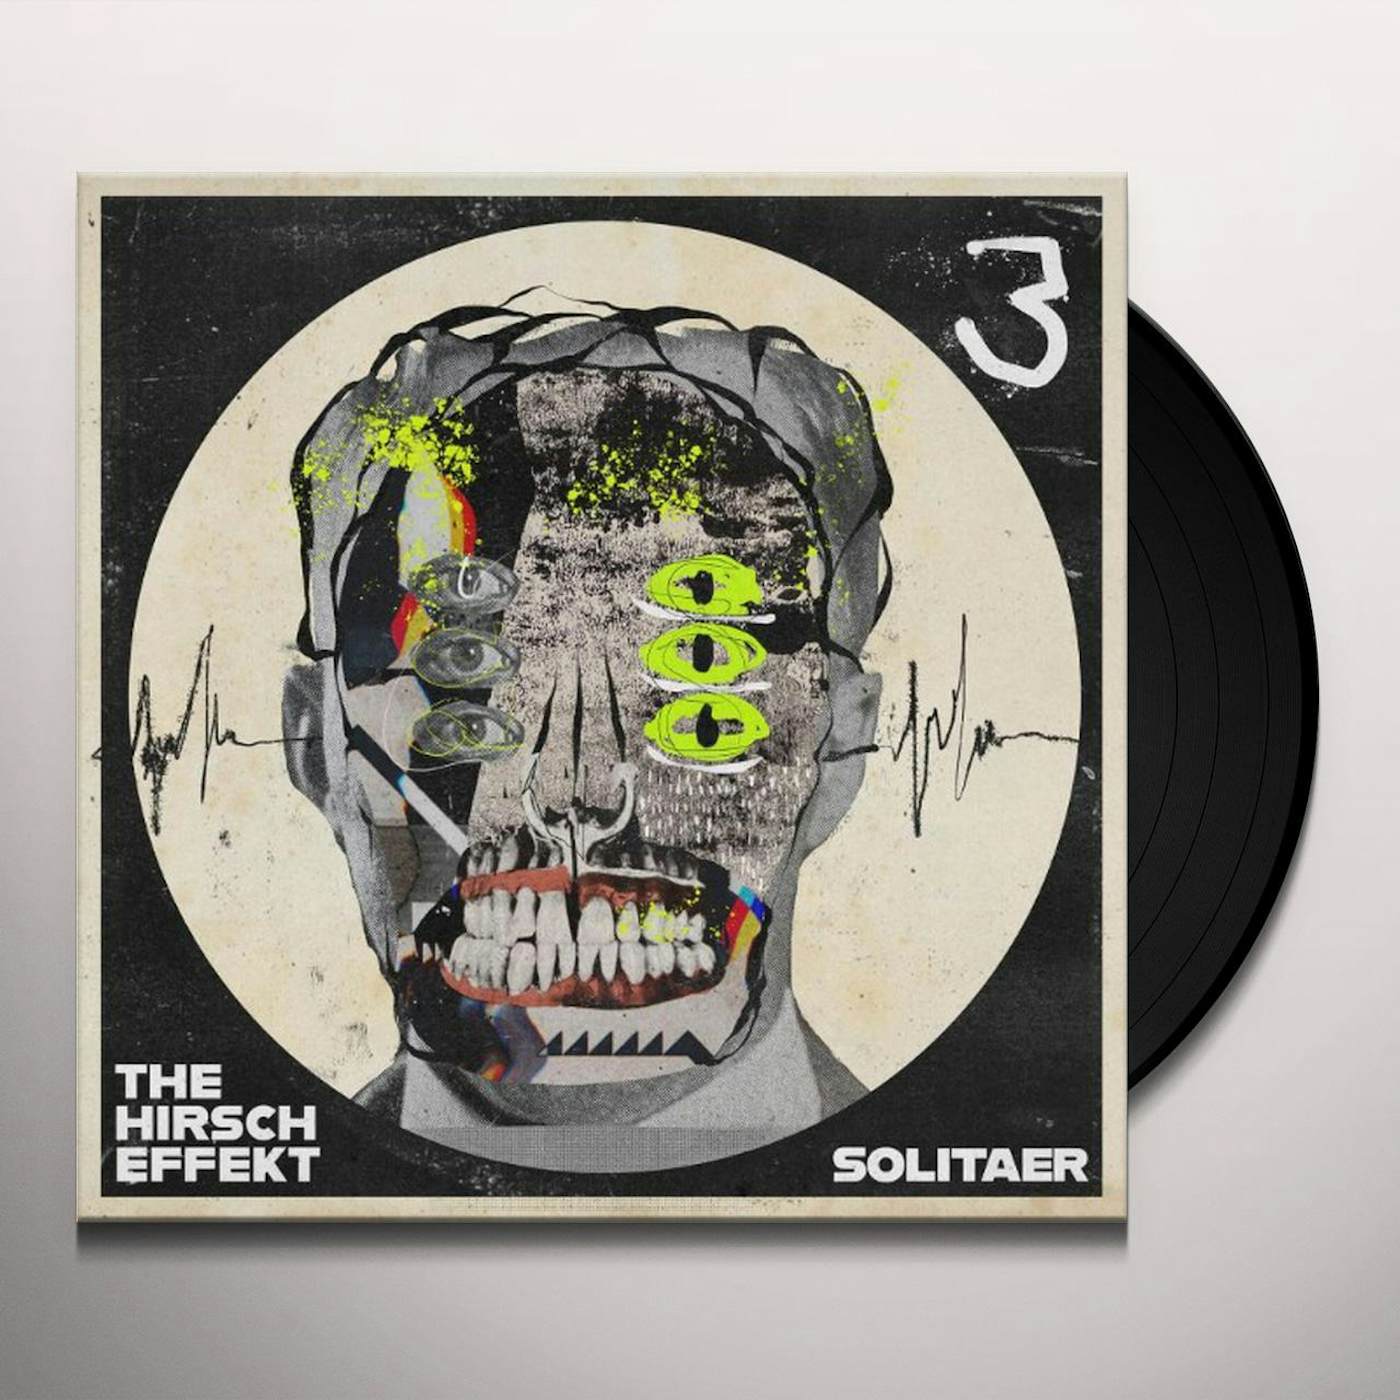 The Hirsch Effekt Solitaer Vinyl Record